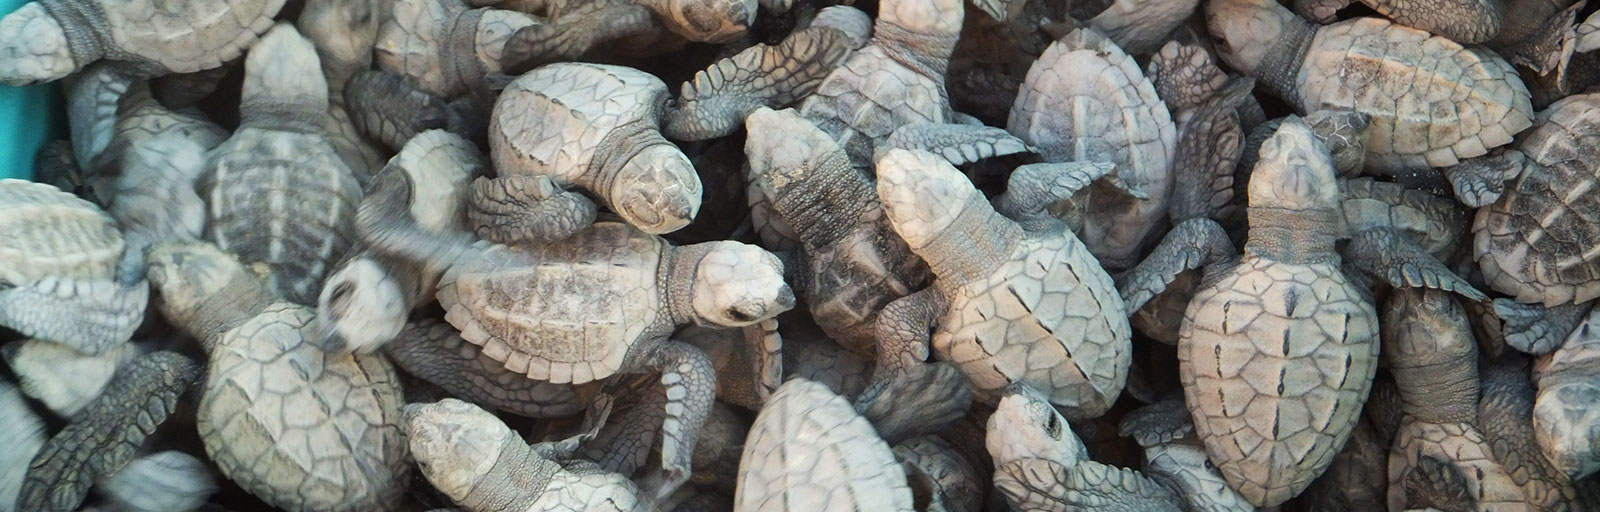 Baja Yoga Retreats in Mexico: Sea Turtle Hatchling Releases